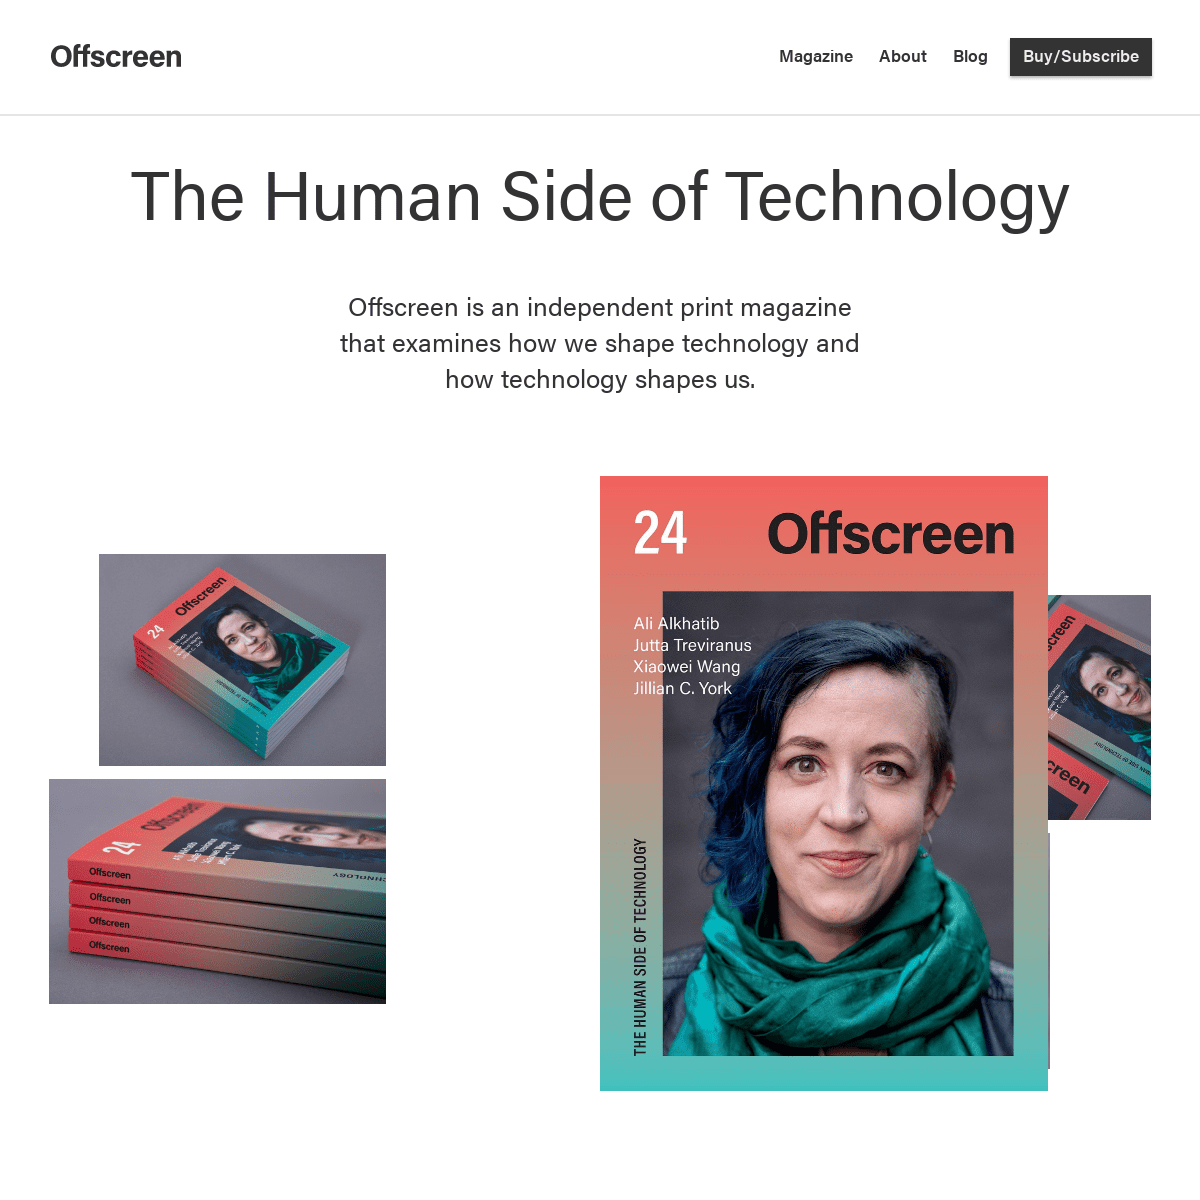 Offscreen Magazine â€“ The Human Side of Technology